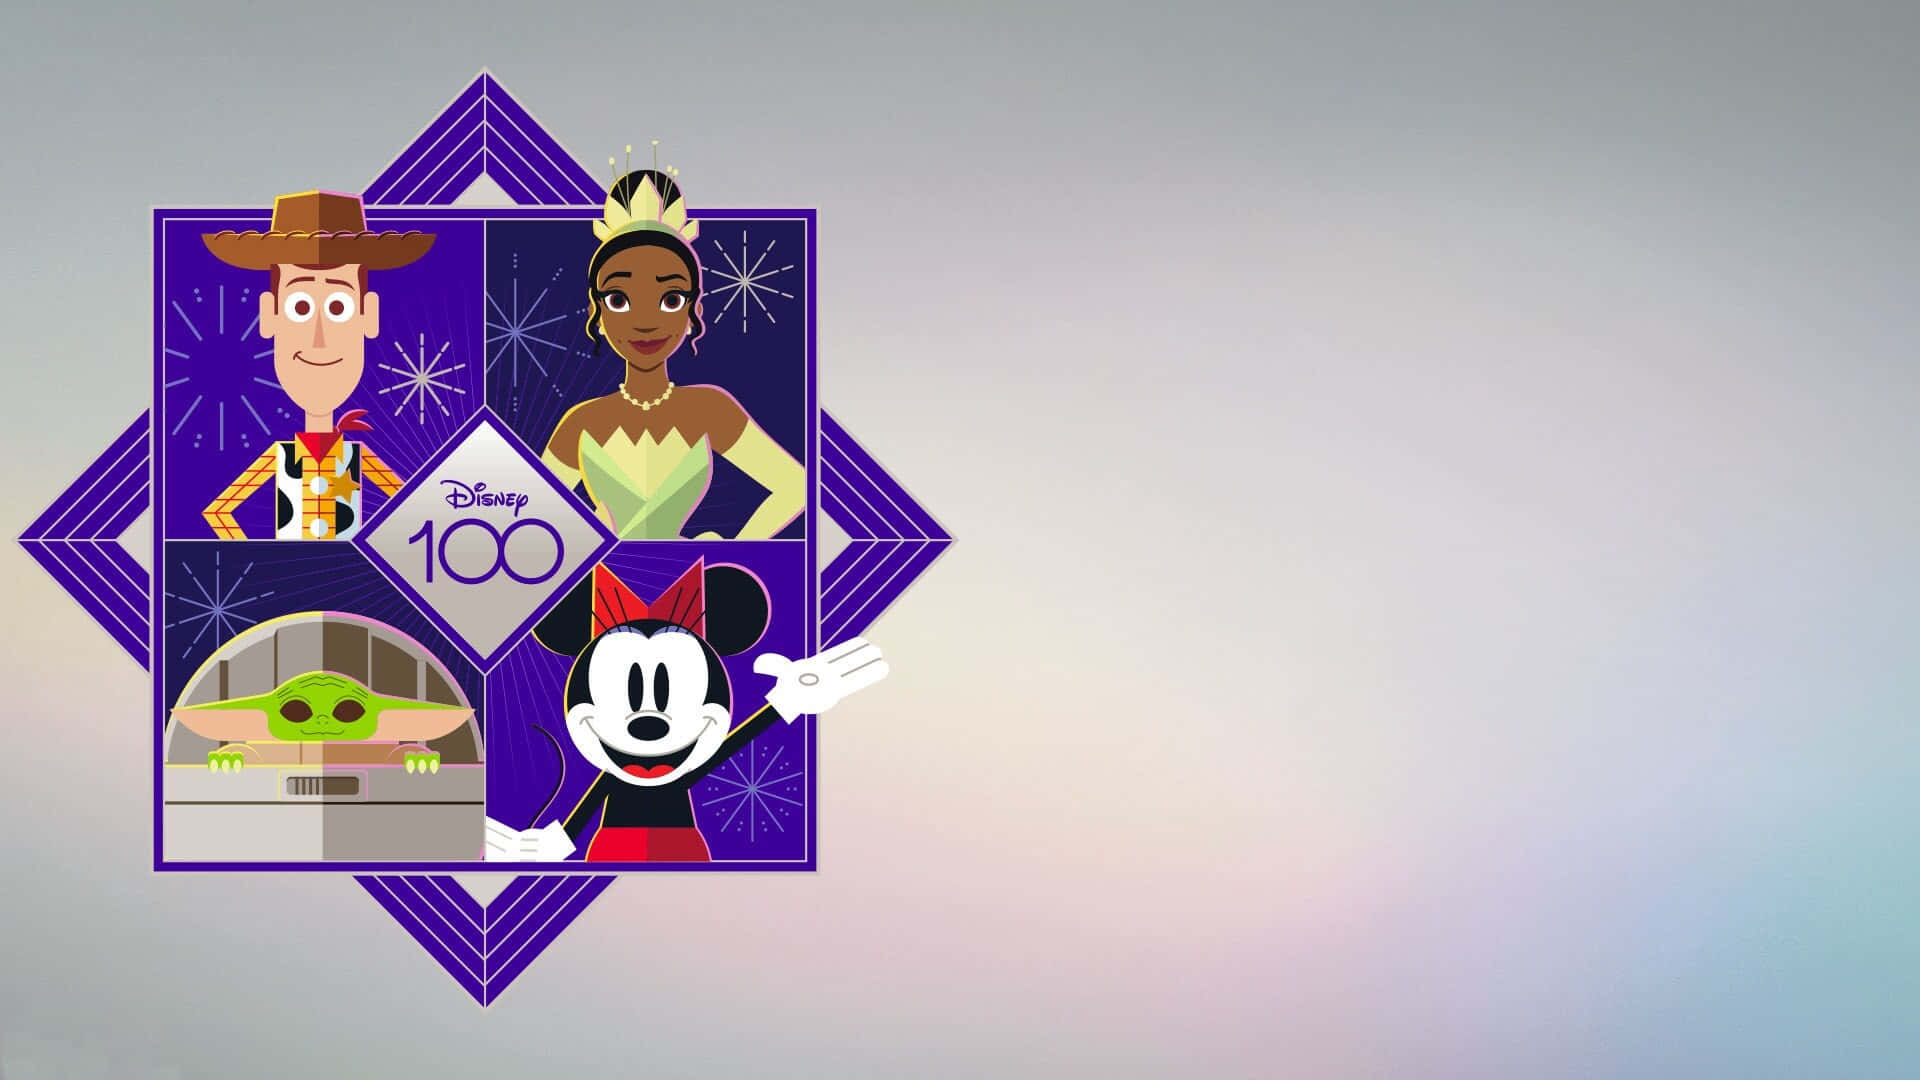 Disney100 Celebration Characters Wallpaper